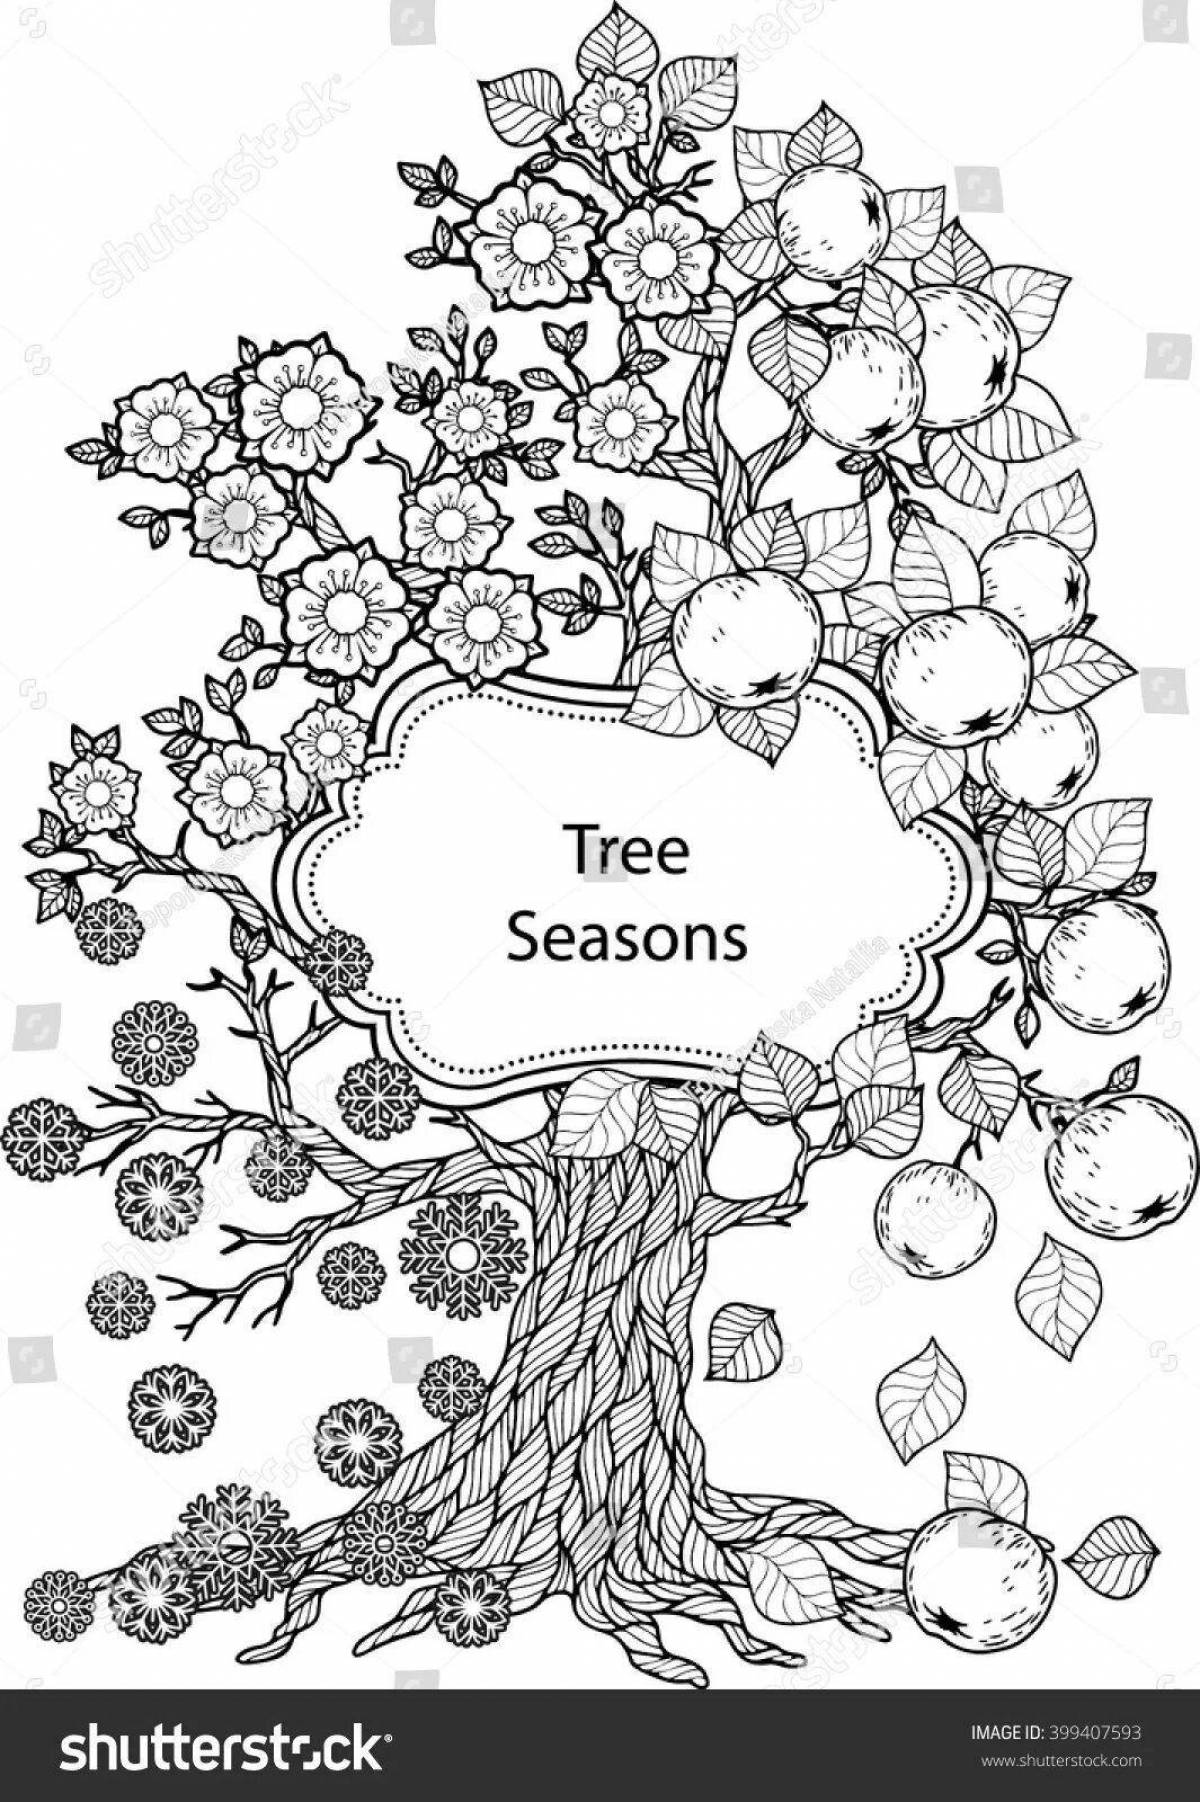 Charming seasons coloring book